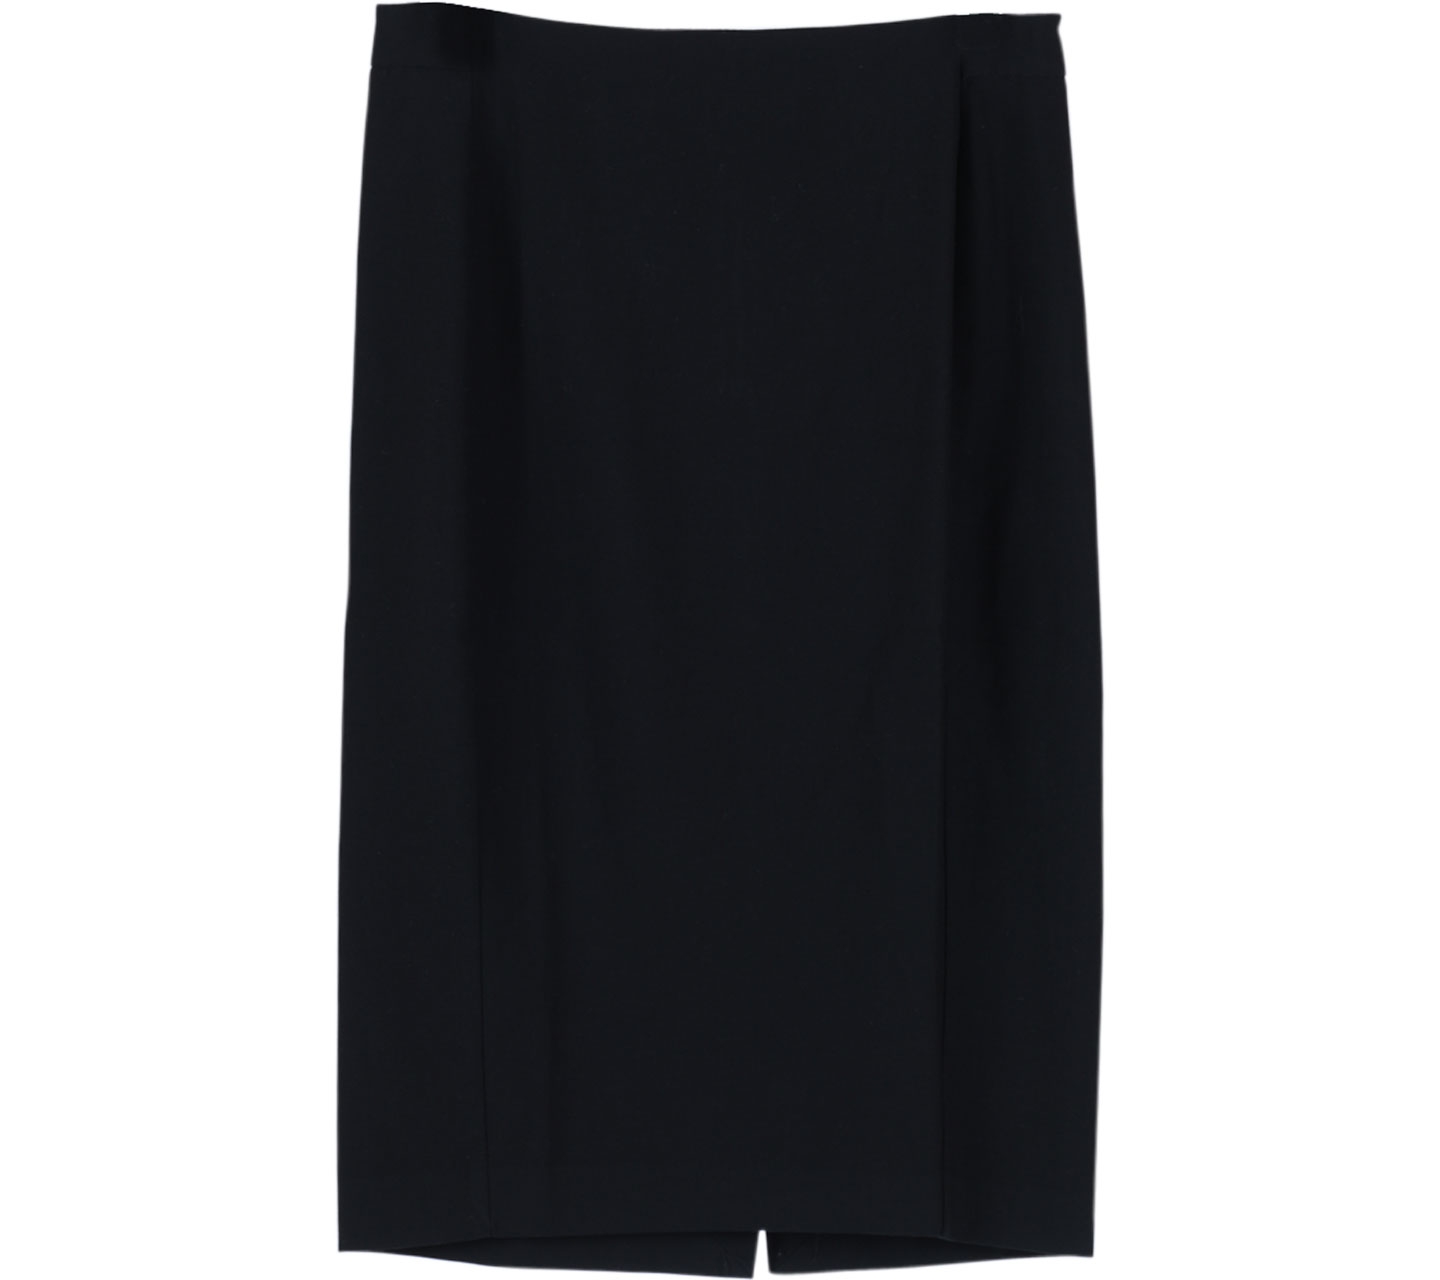 Zara Black Pencil Skirt